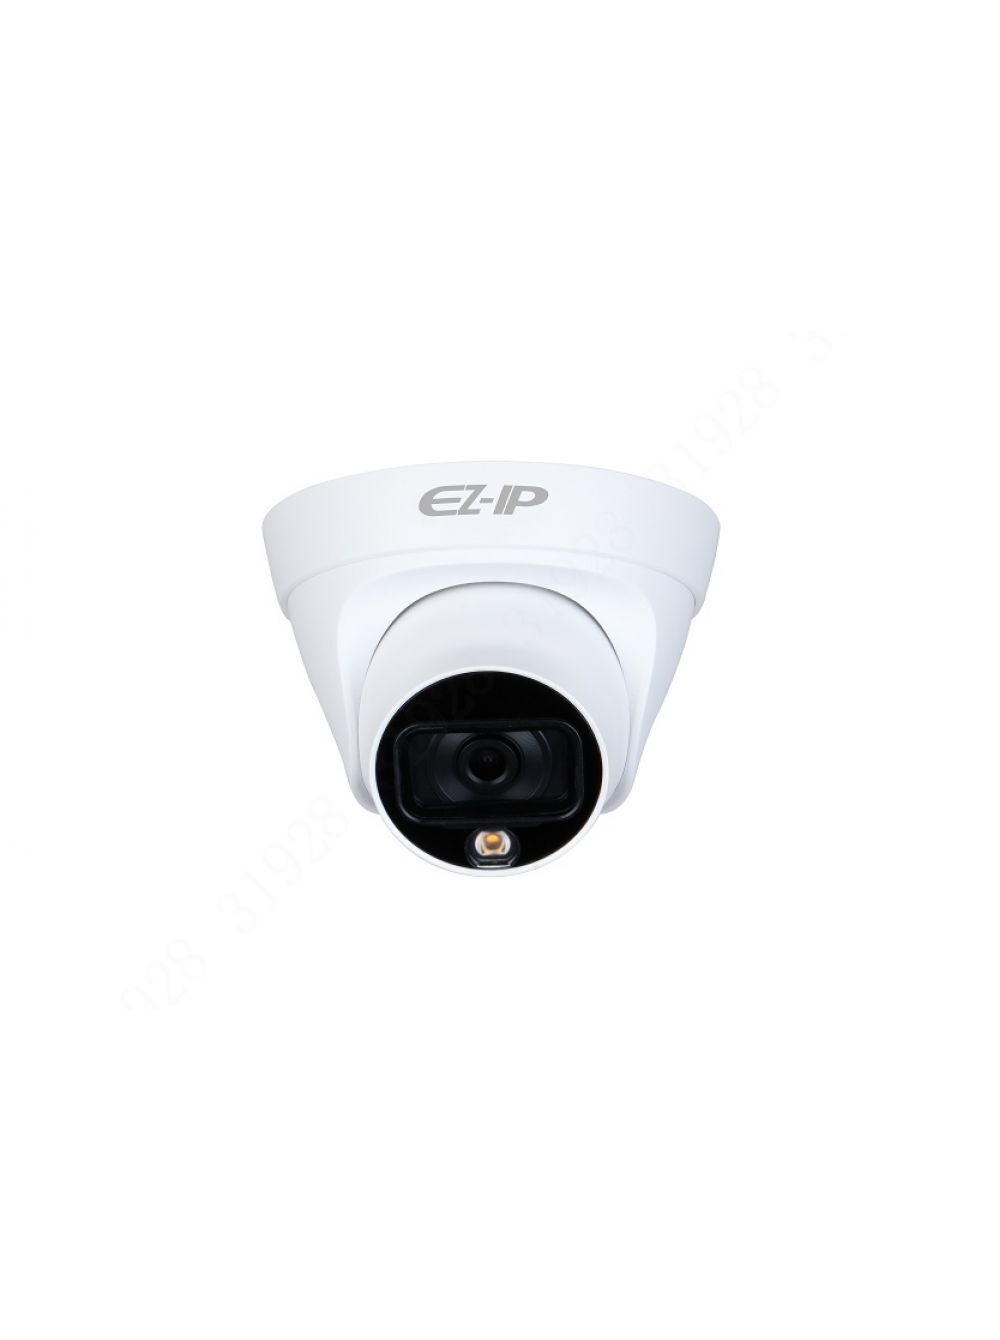 Купольная IP-камера (Dome) Ez-ip ez-ipc-t1b20p-led-0360b